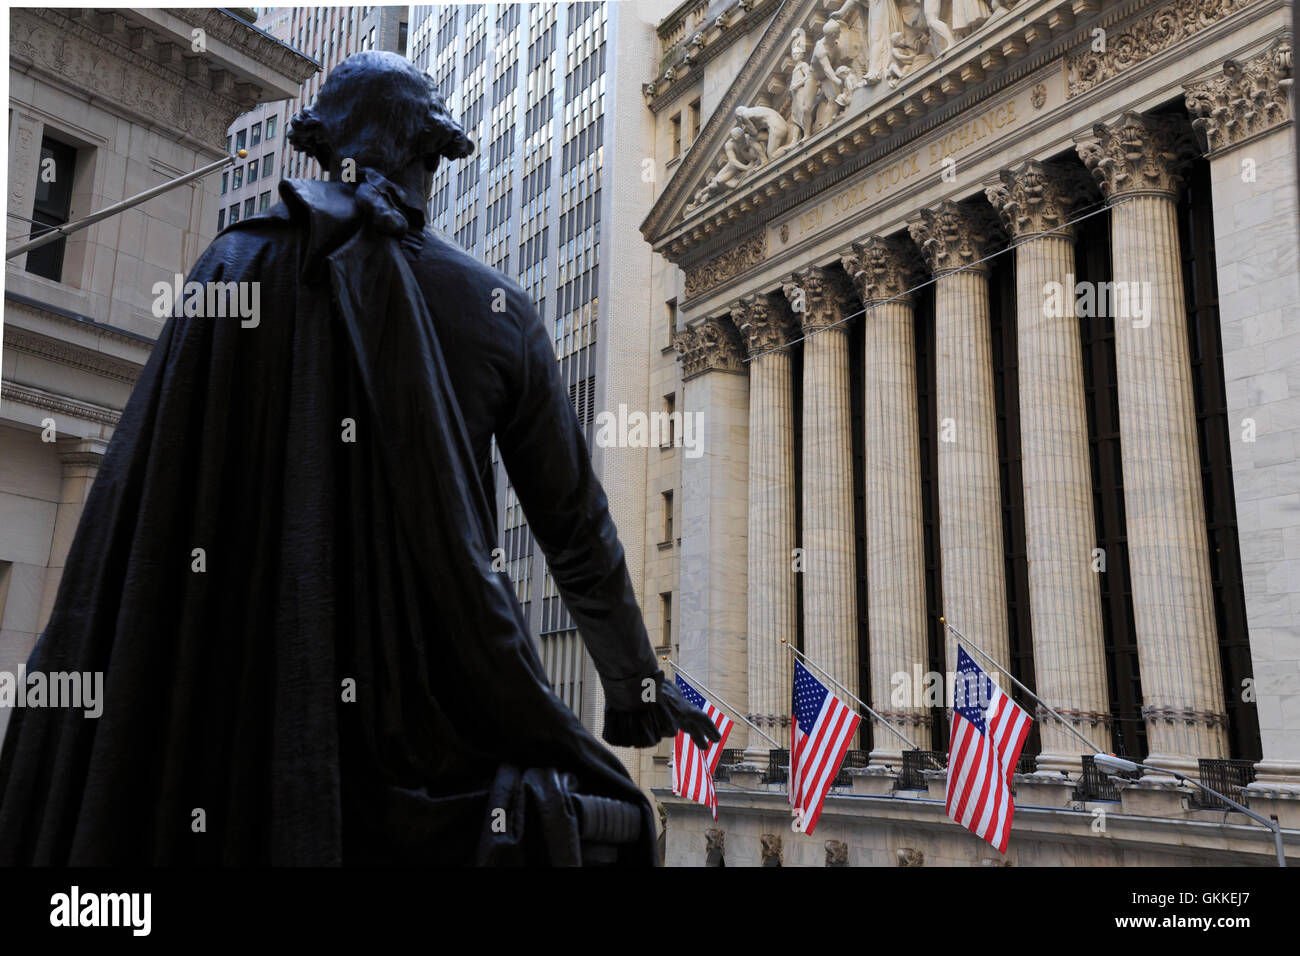 USA, New York, New York City, Lower Manhattan, Wall Street Stock Photo